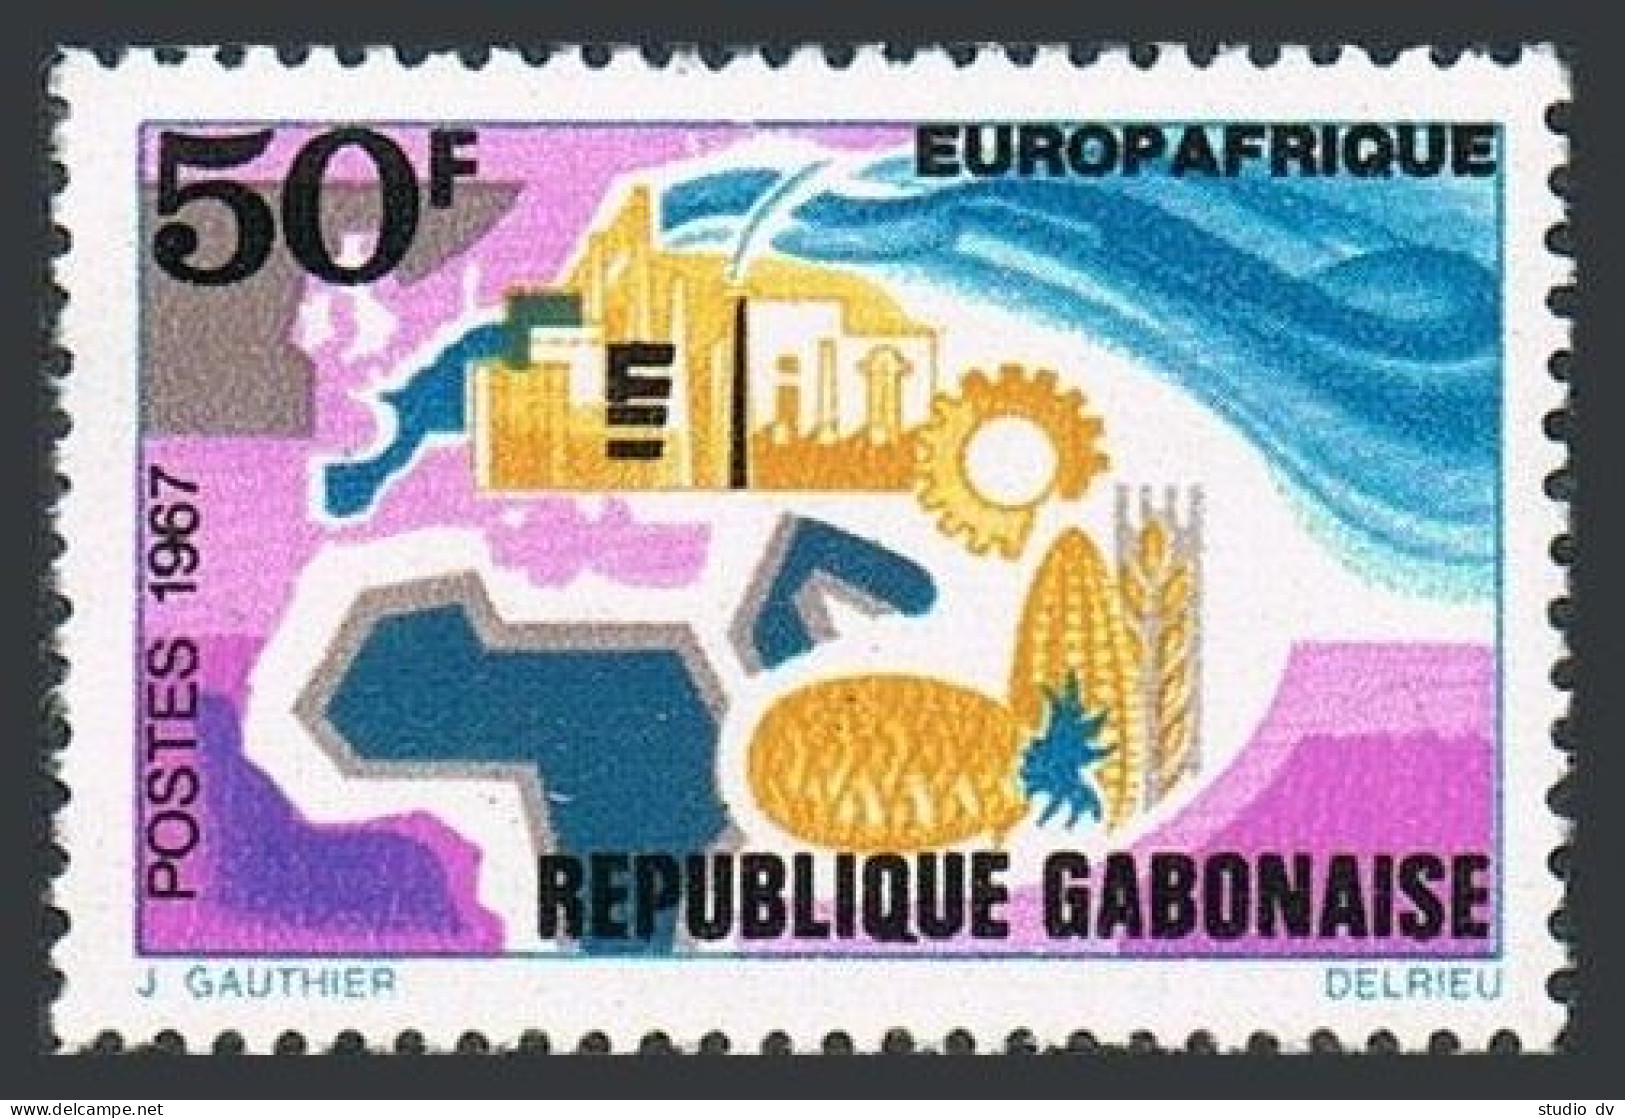 Gabon 219,MNH.Michel 282. EUROPAFRICA 1967.Map,products. - Gabon